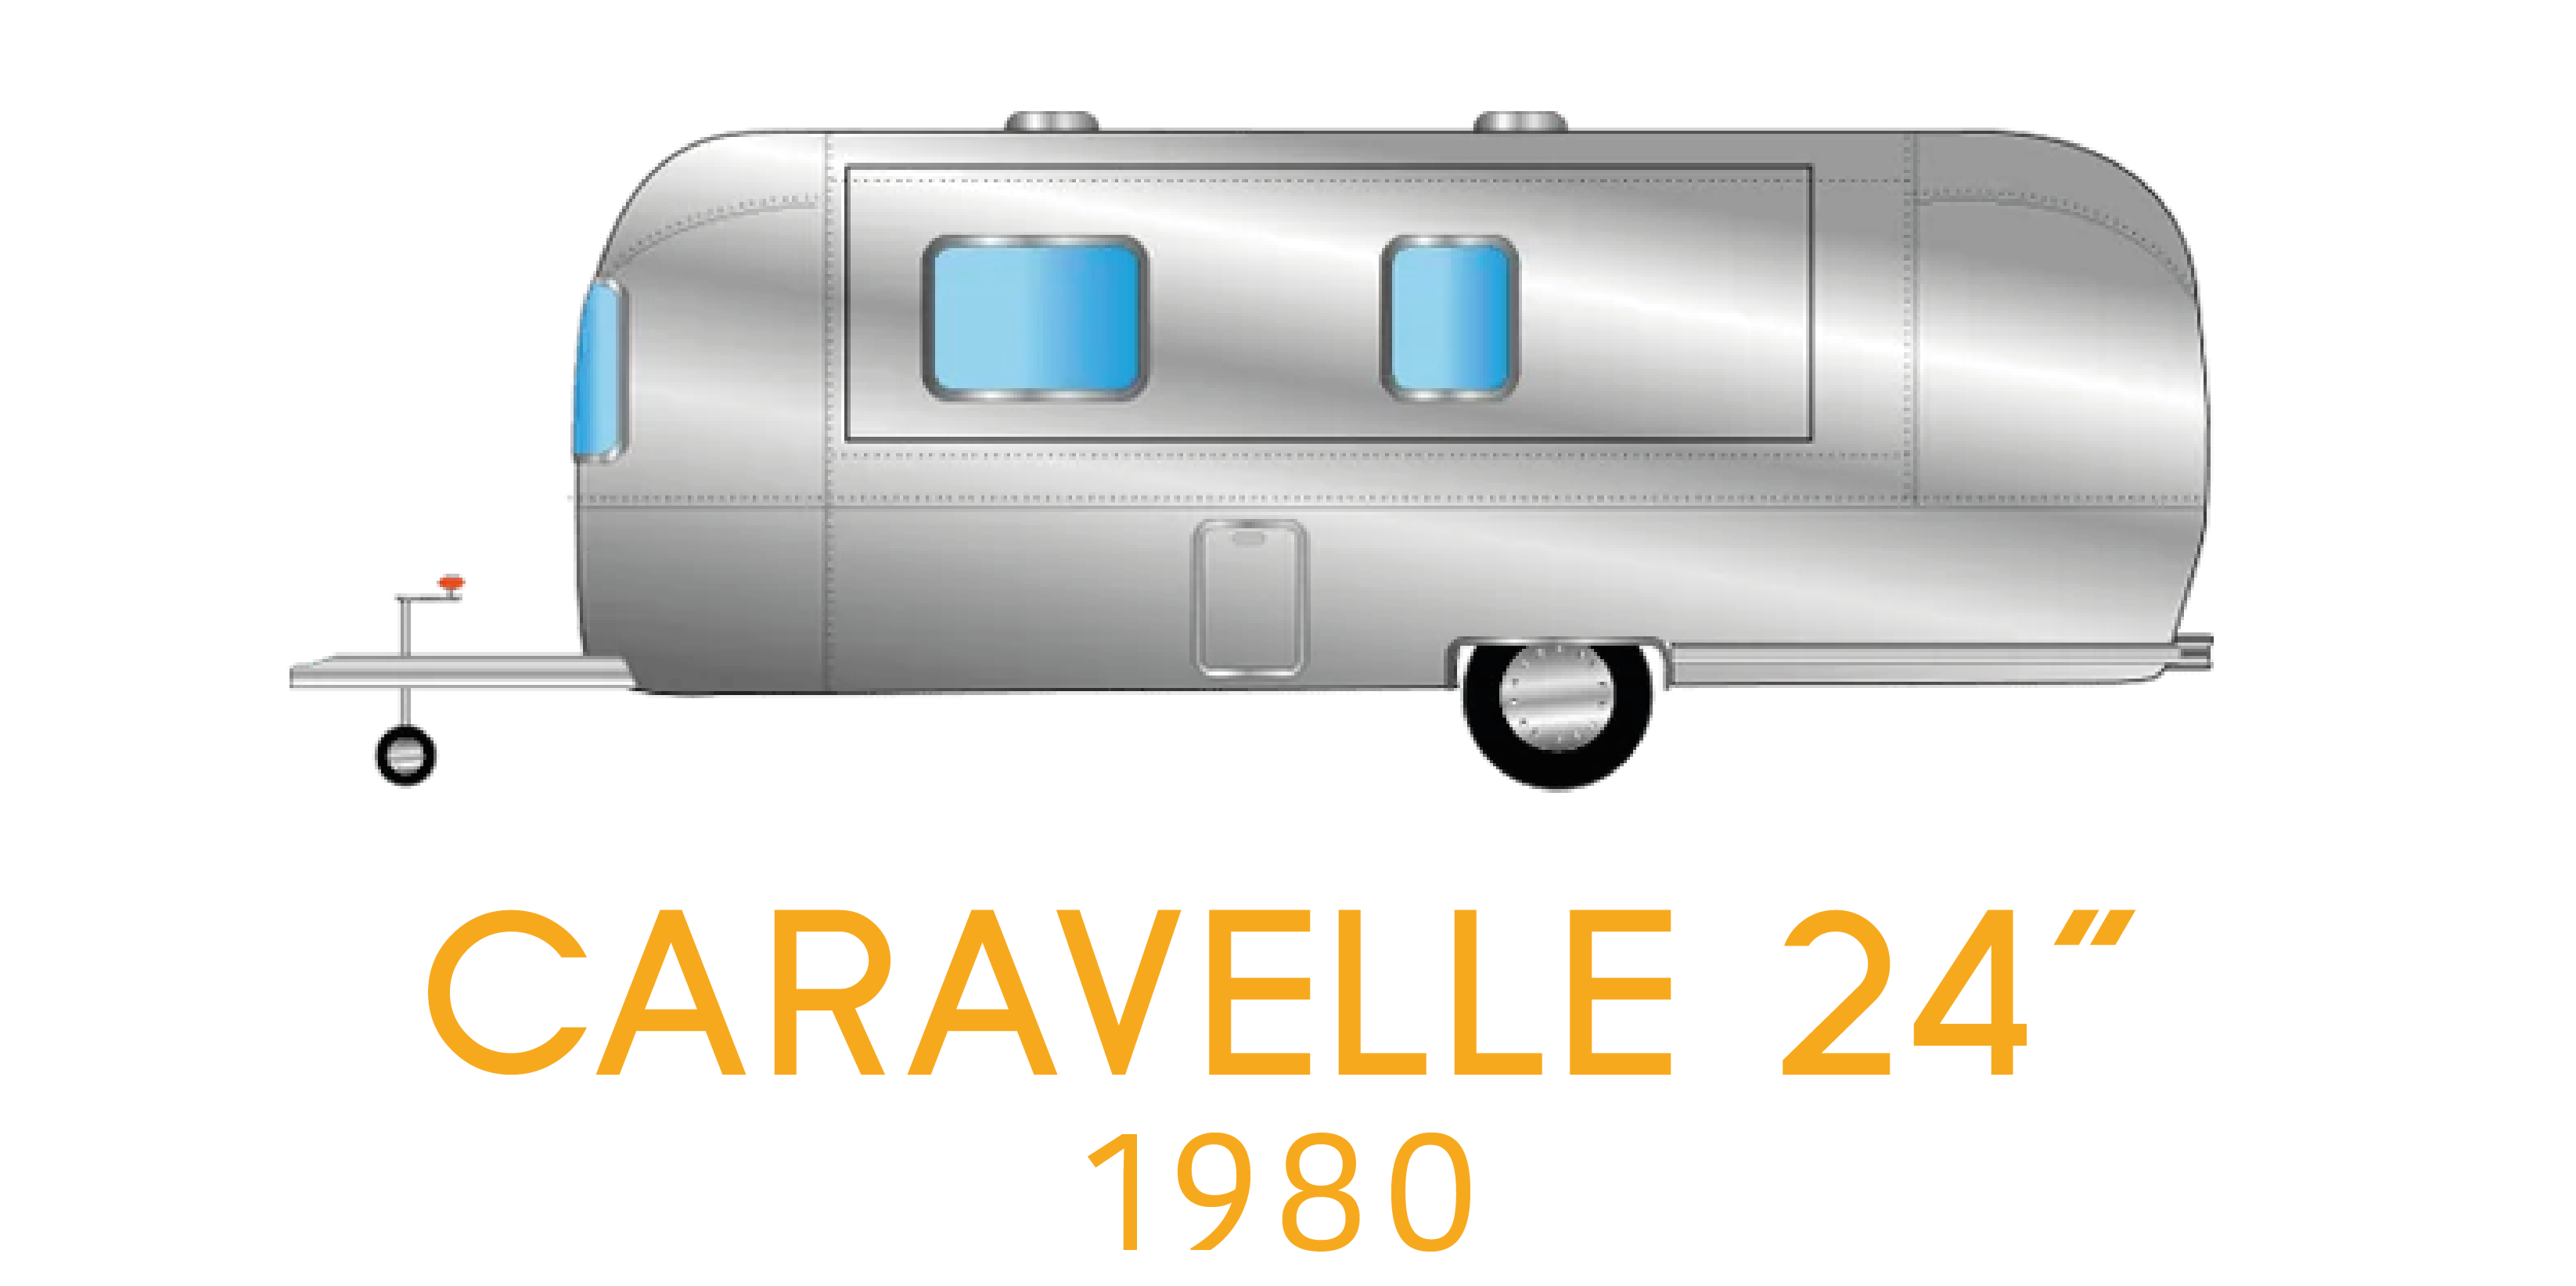 caravelle 24 1980